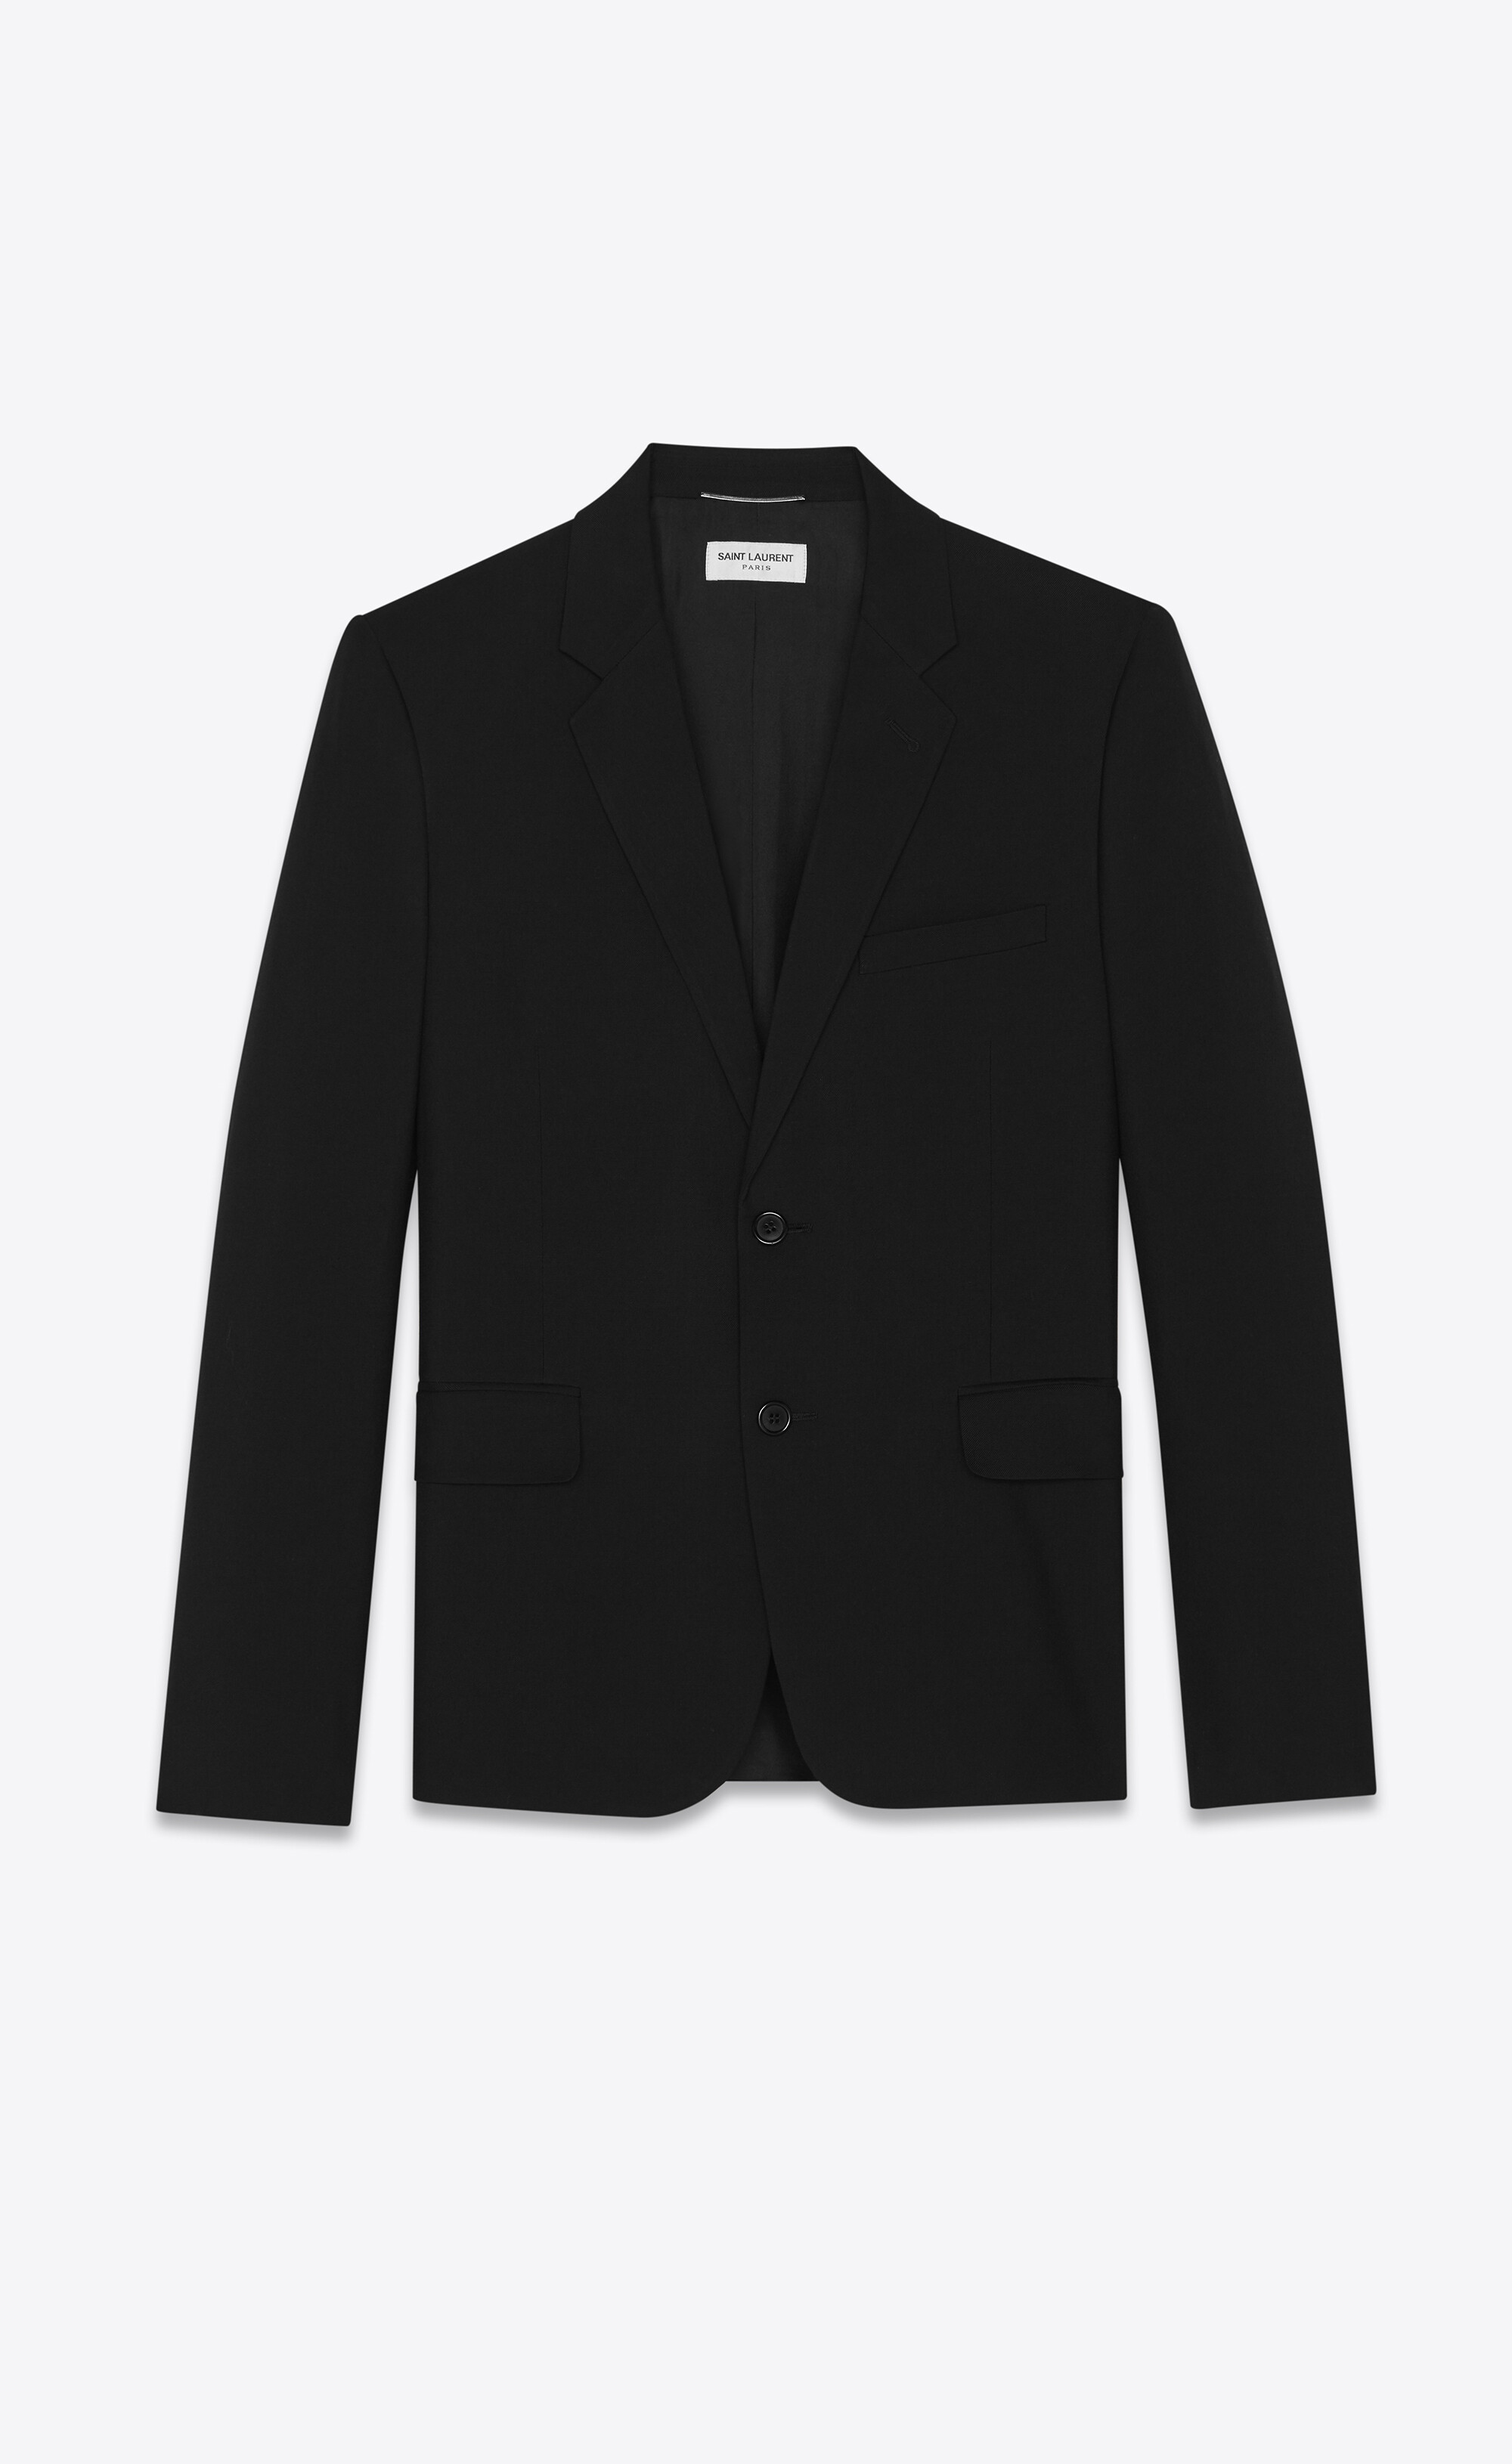 Saint Laurent, Jackets & Coats